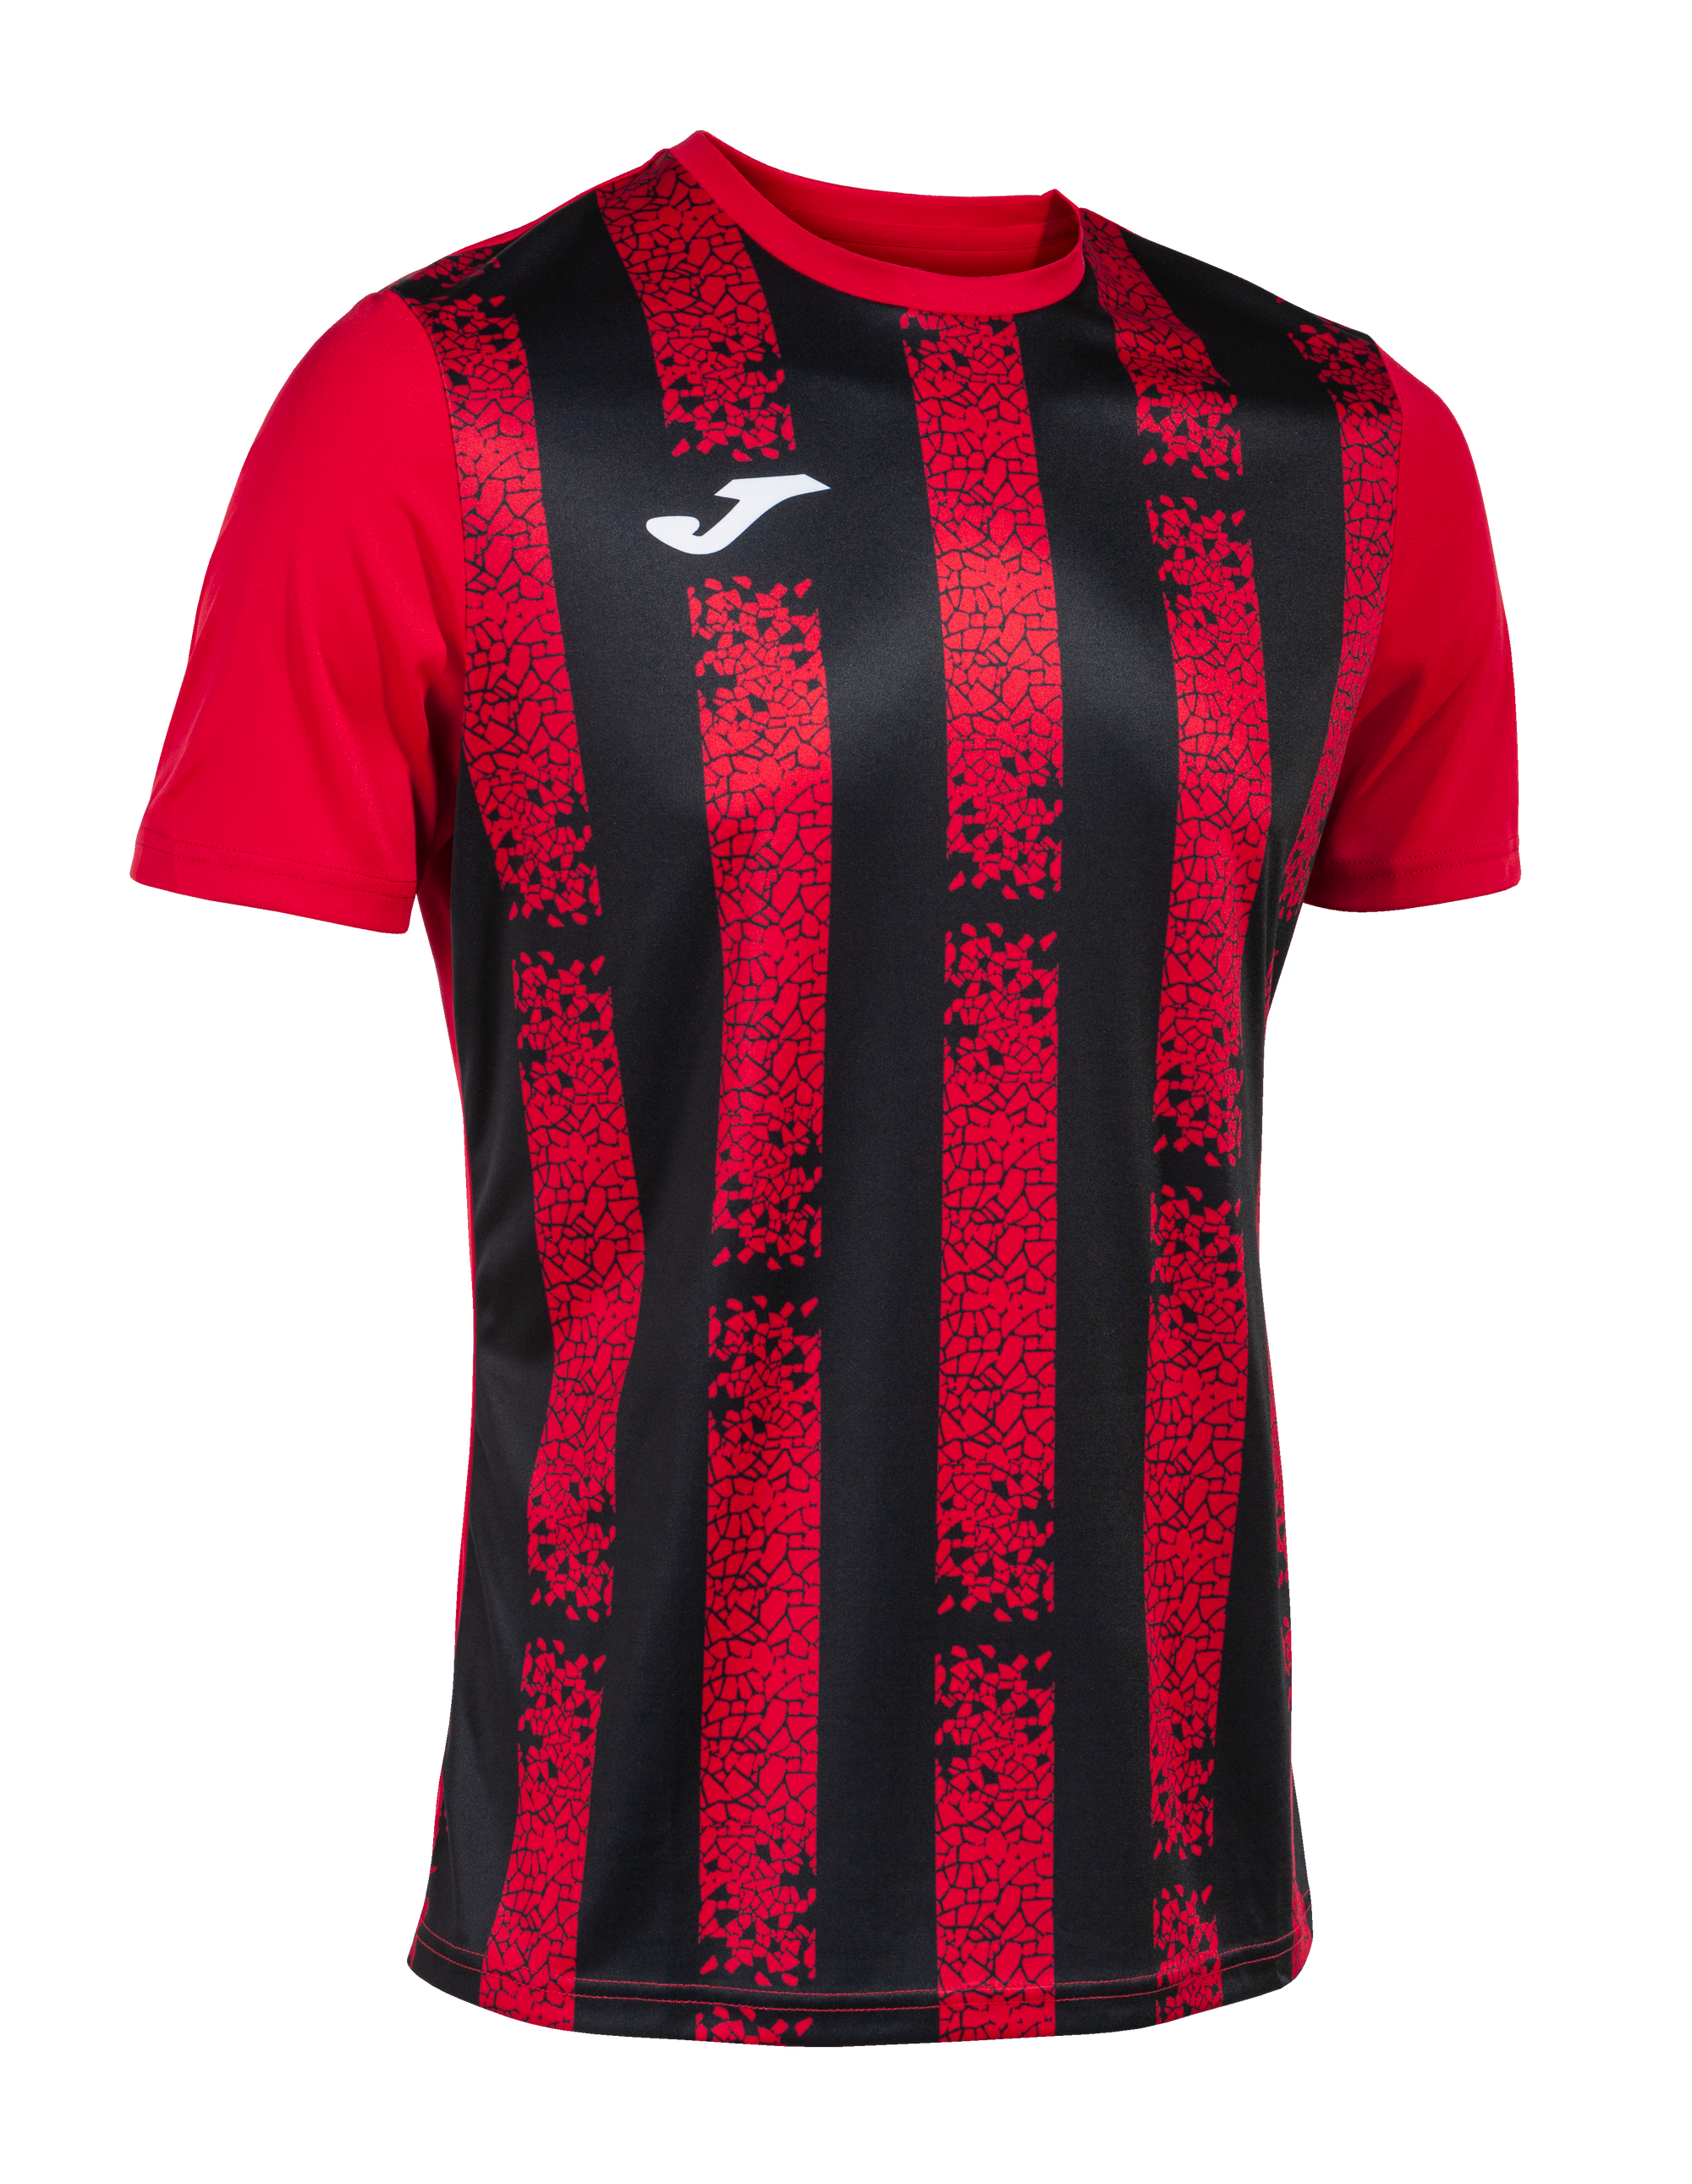 Joma Inter III Short Sleeve T-Shirt - Red/Black